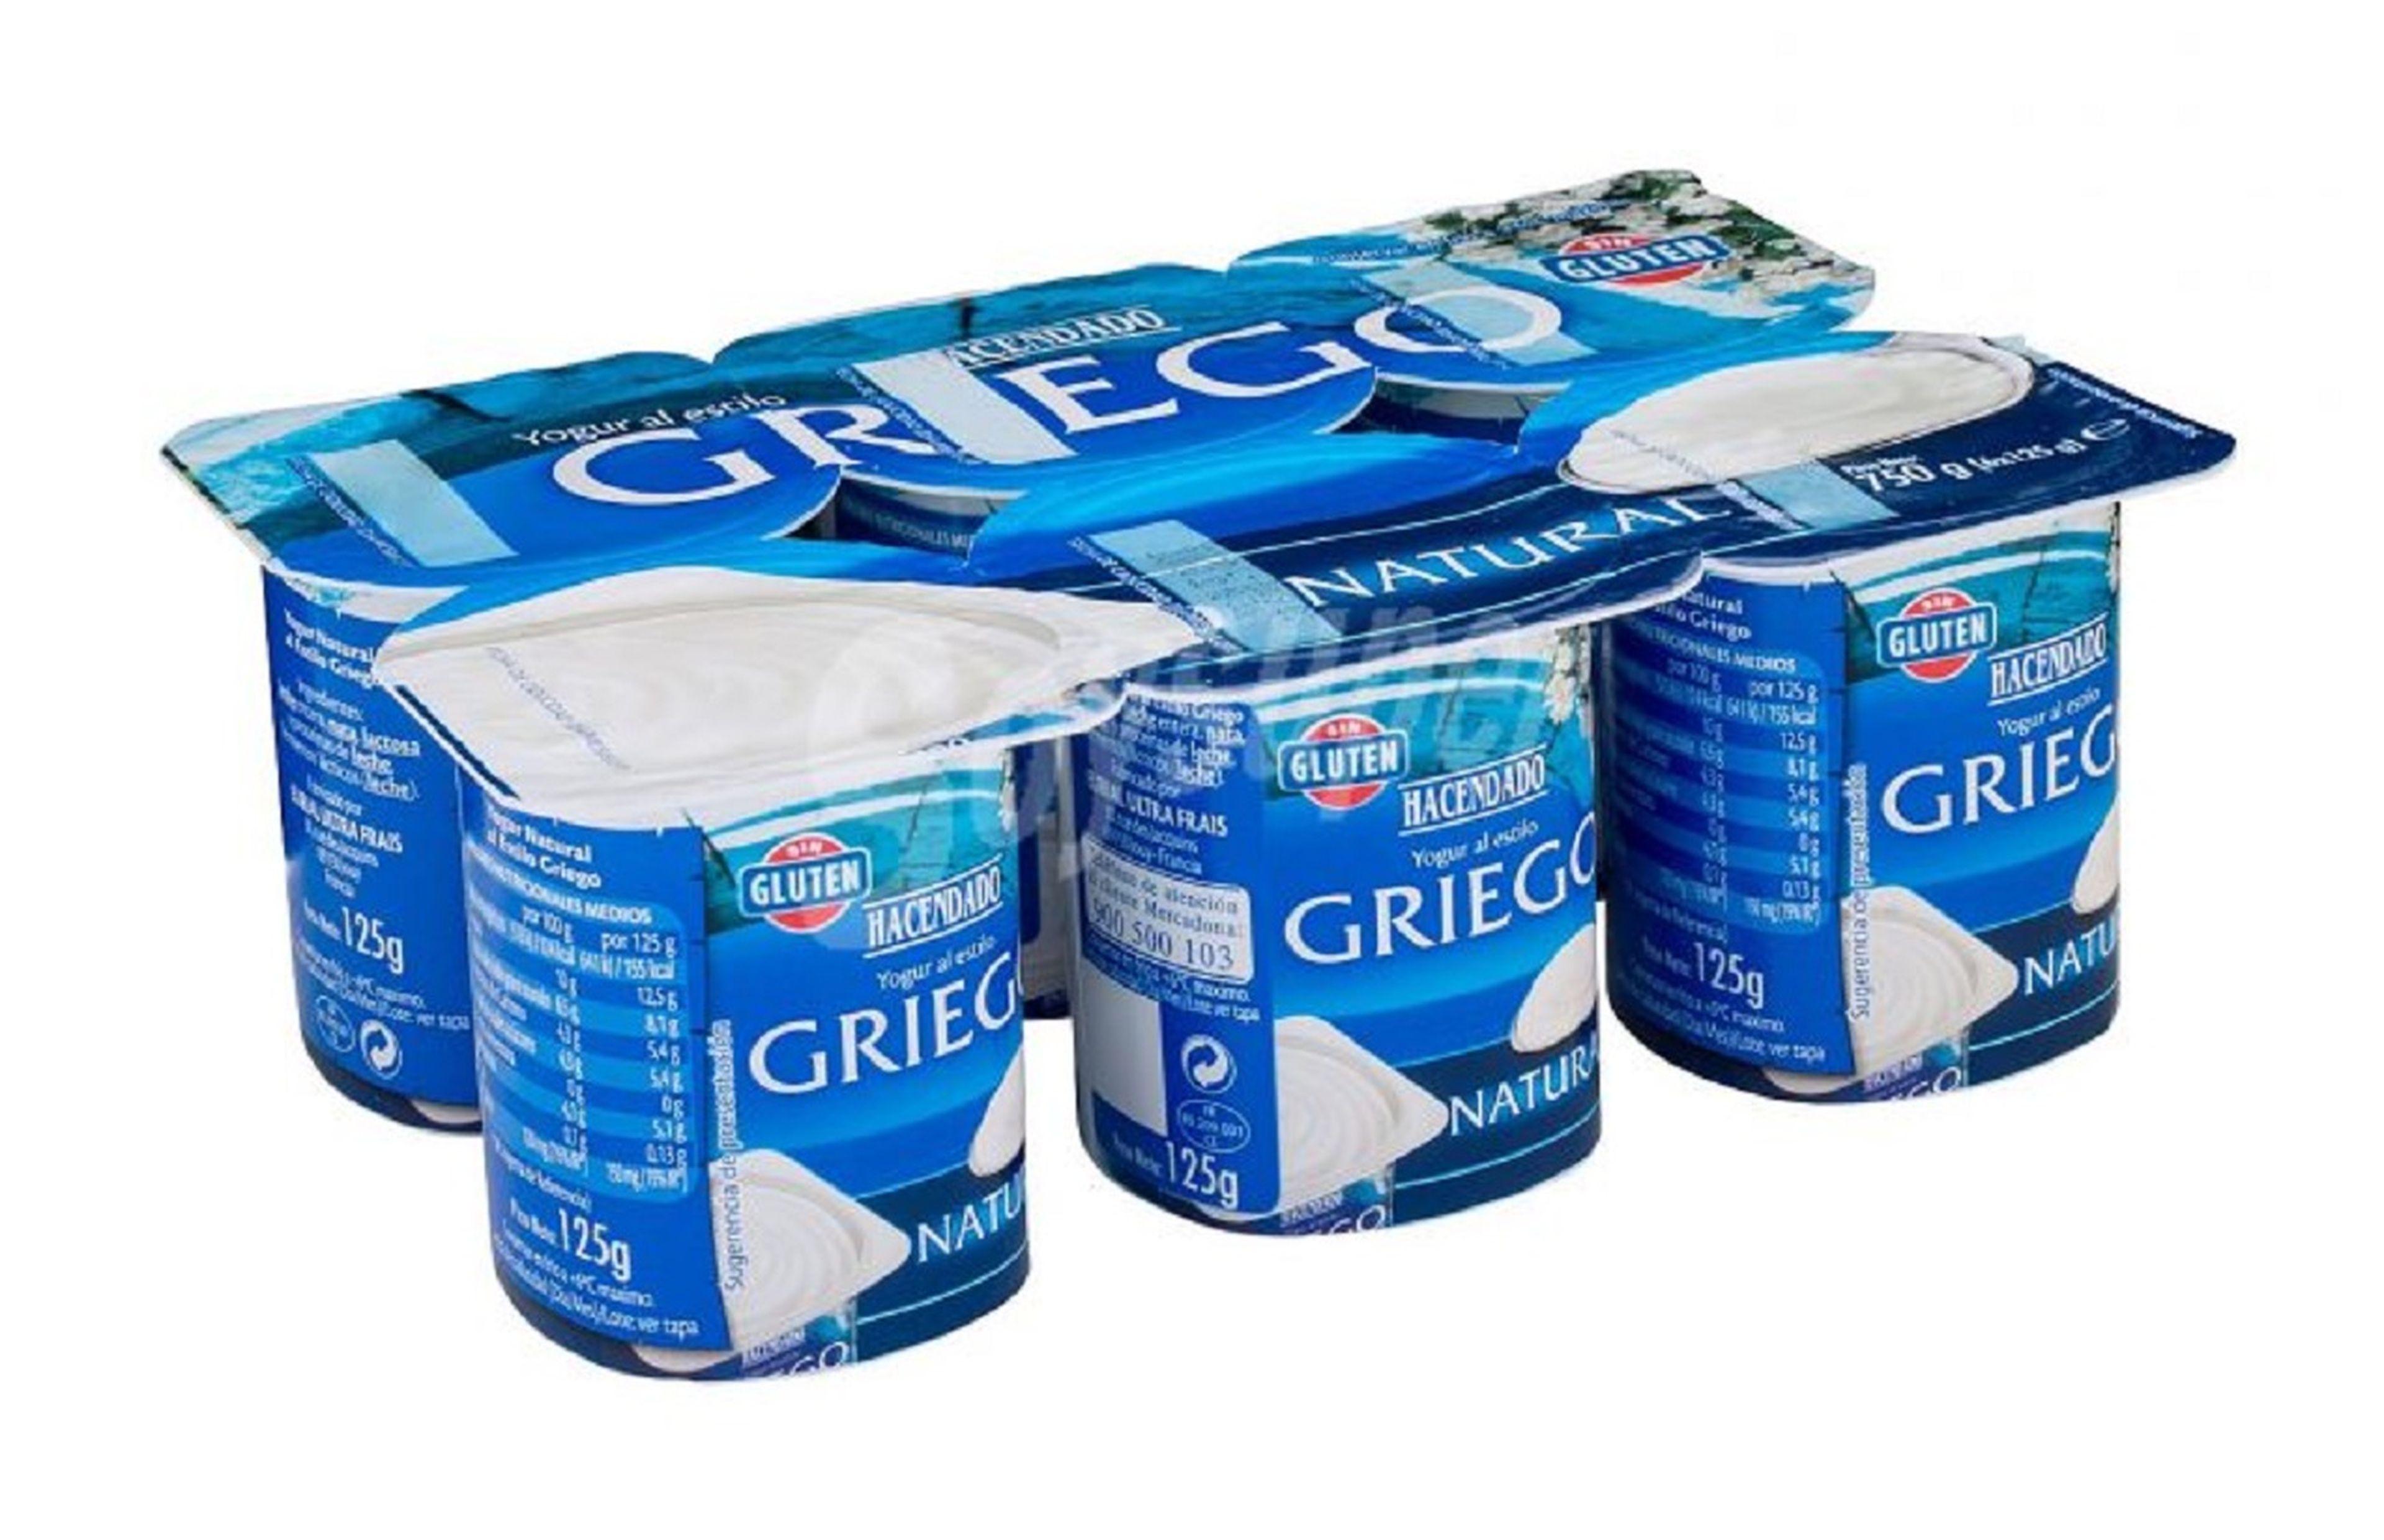 Yogur griego natural de Mercadona